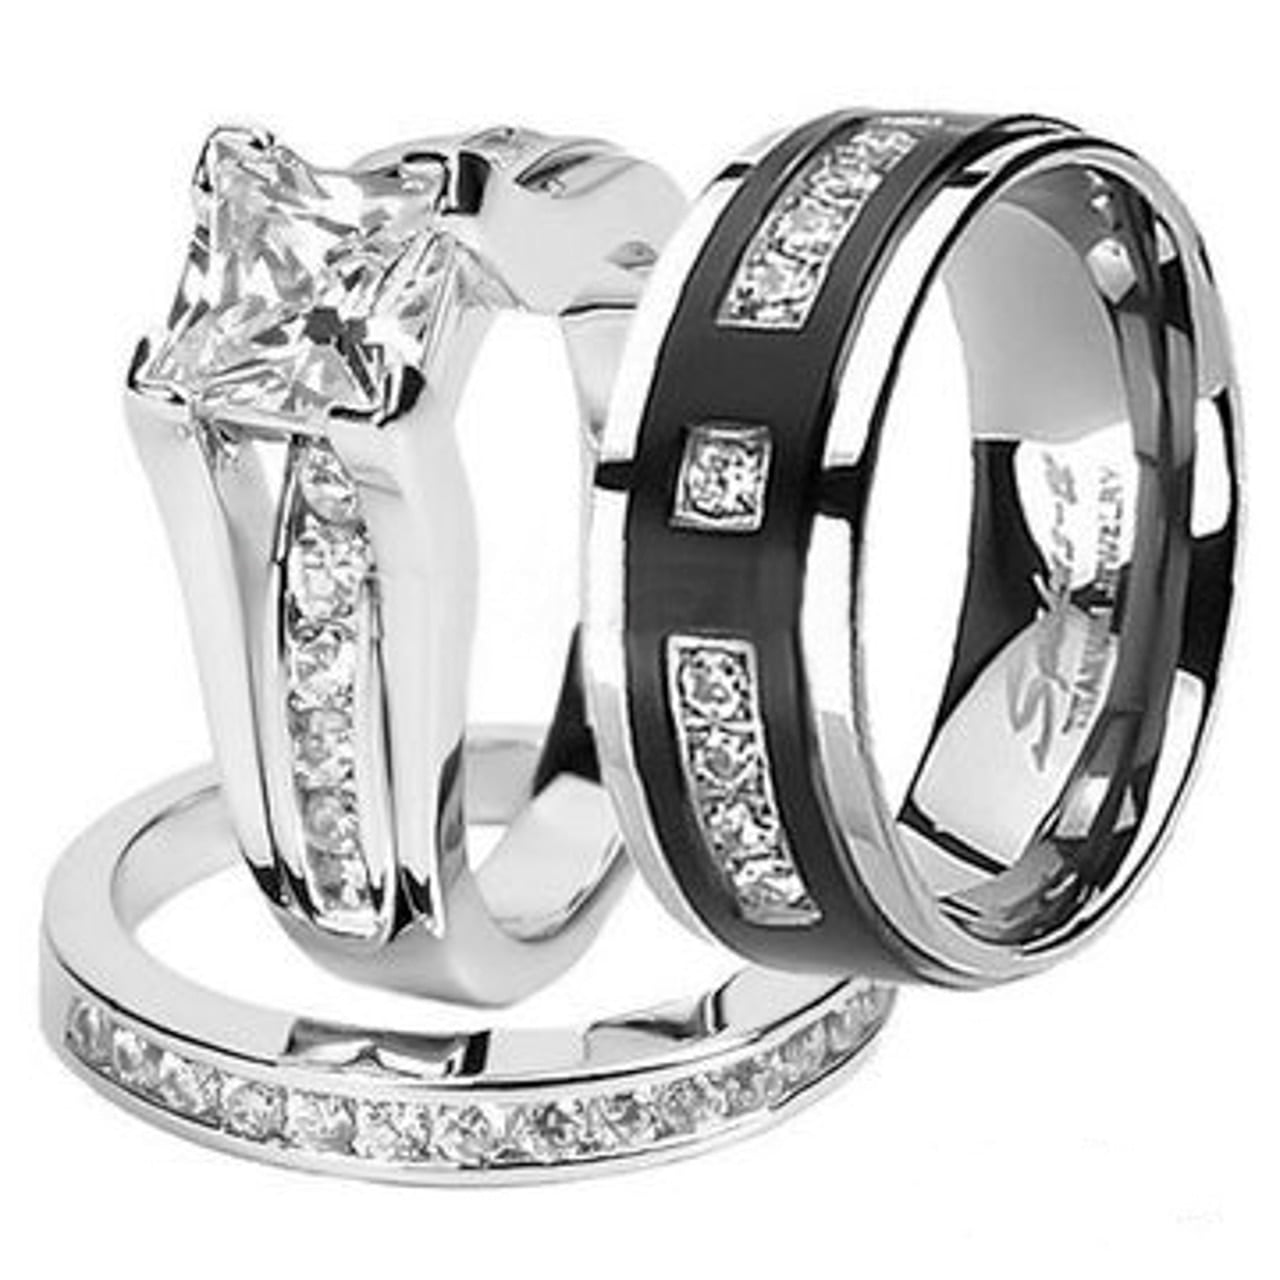 MEN'S FANCY DESIGNER DIAMOND CUT WEDDING BAND.925 Sterling Silver Ring SIZE 9-12 